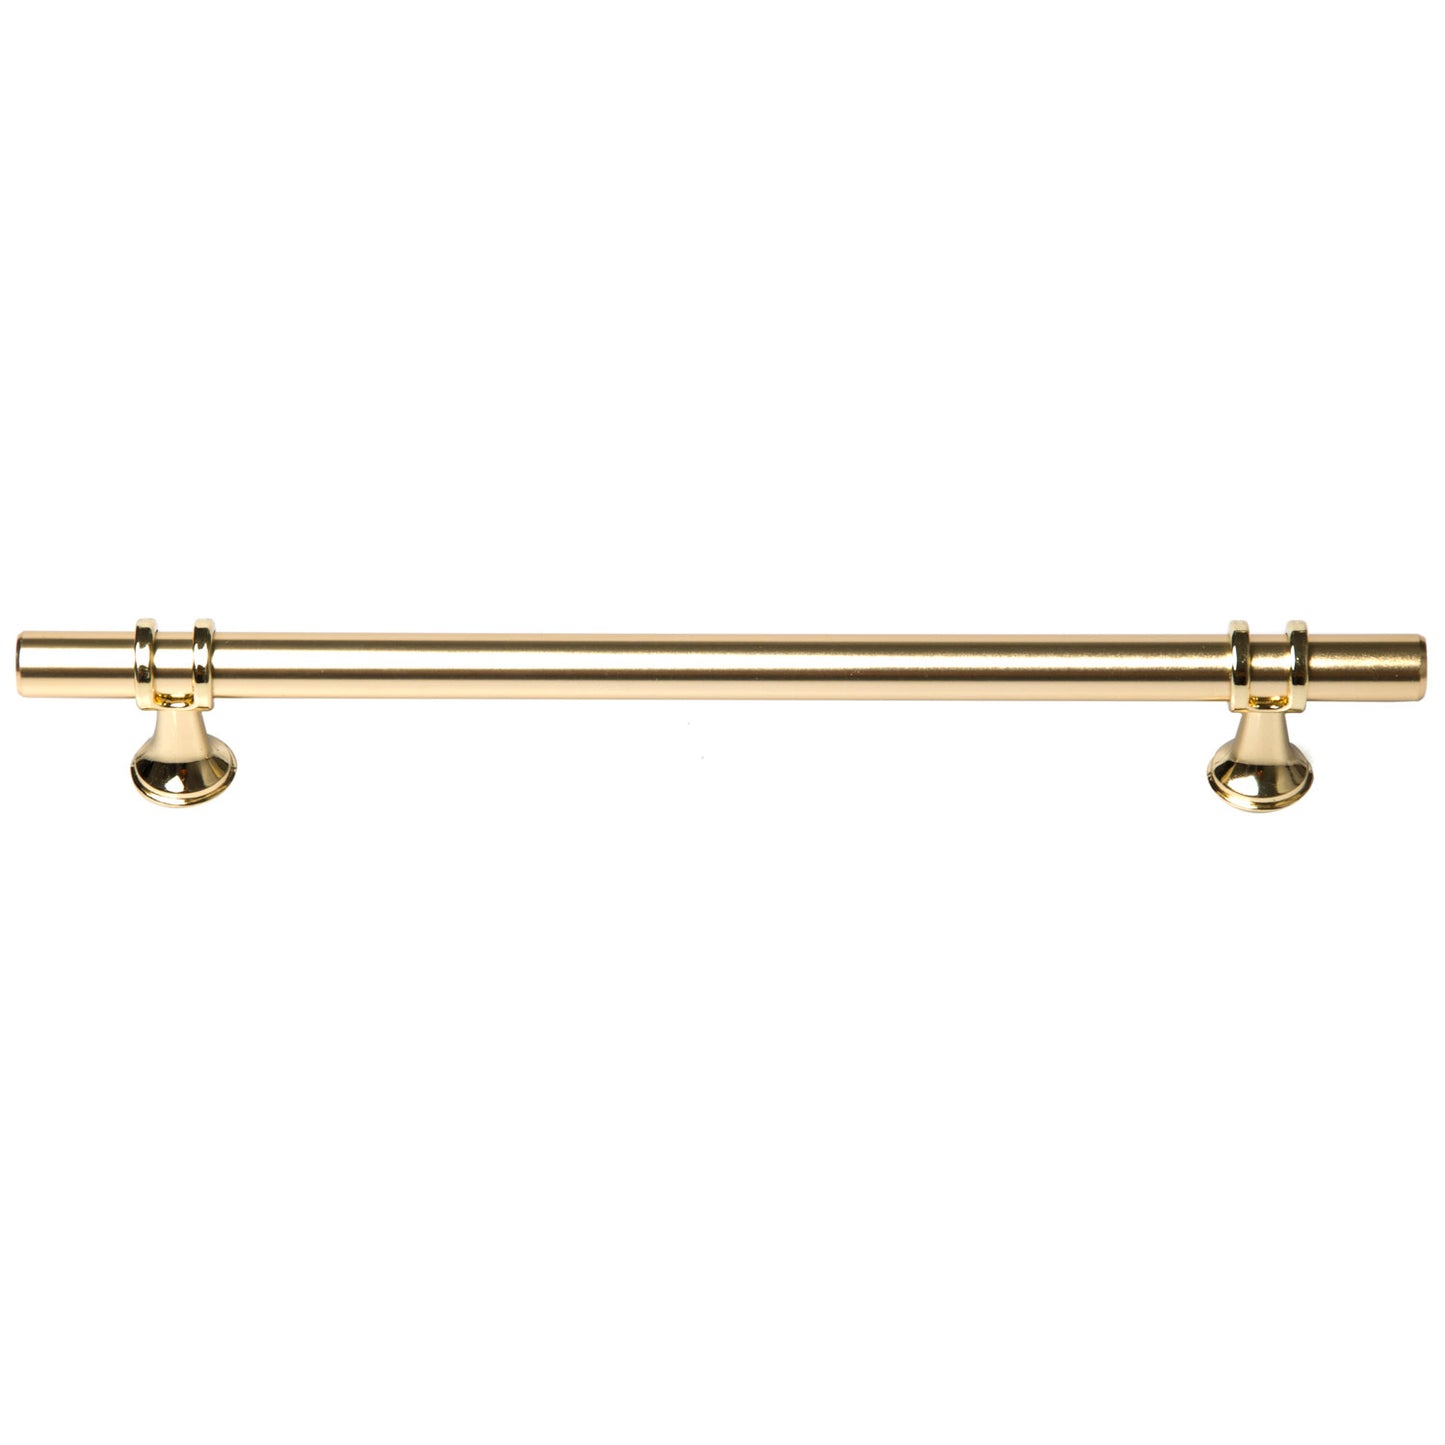 Luxury Design Kitchen Cabinet Handles Drawer Bar Handle Pull Gold 190MM